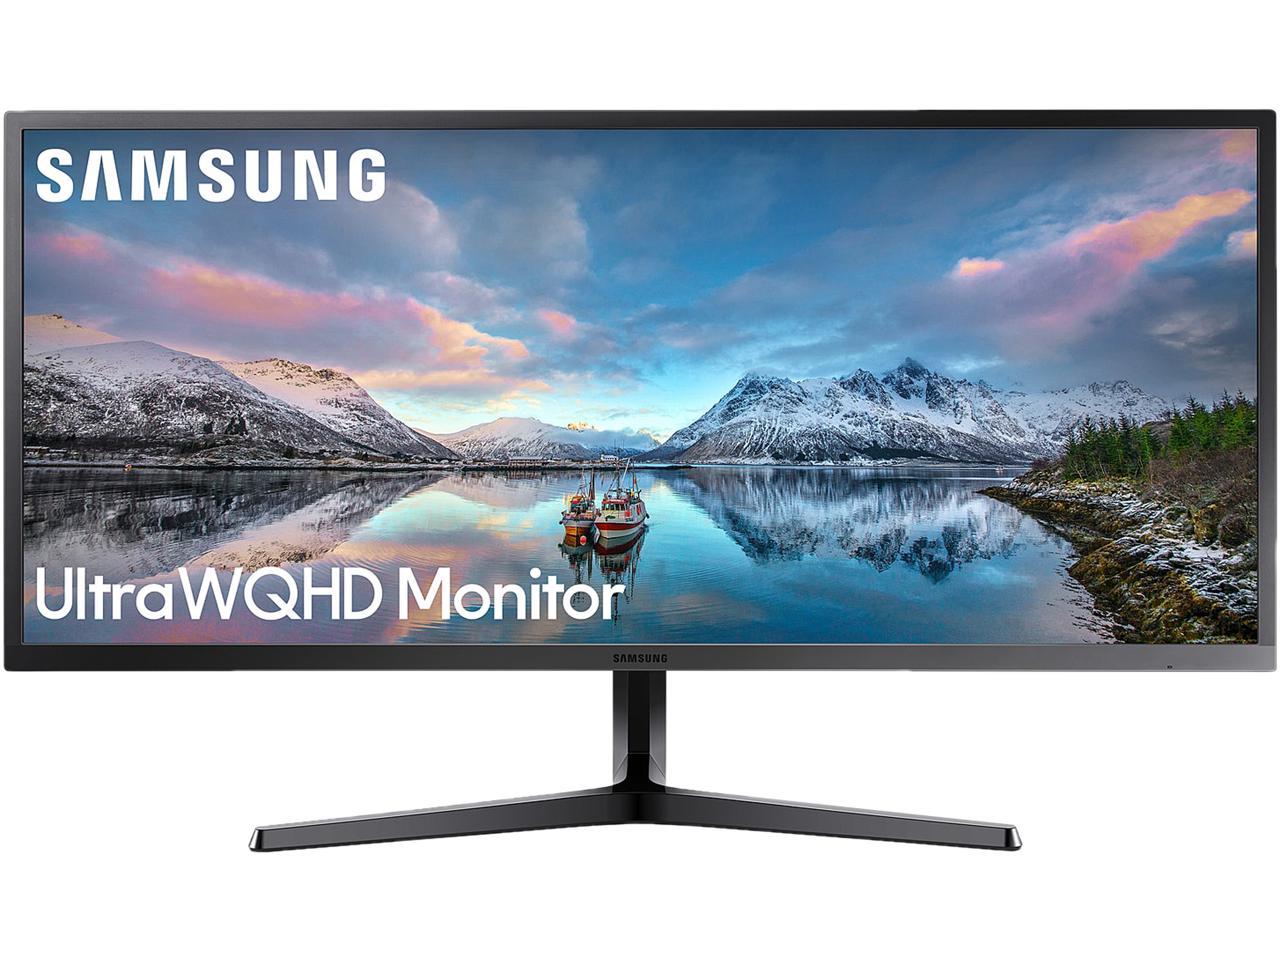 34" Samsung LS34J550WQNXZA UWQHD Monitor $260 at Newegg